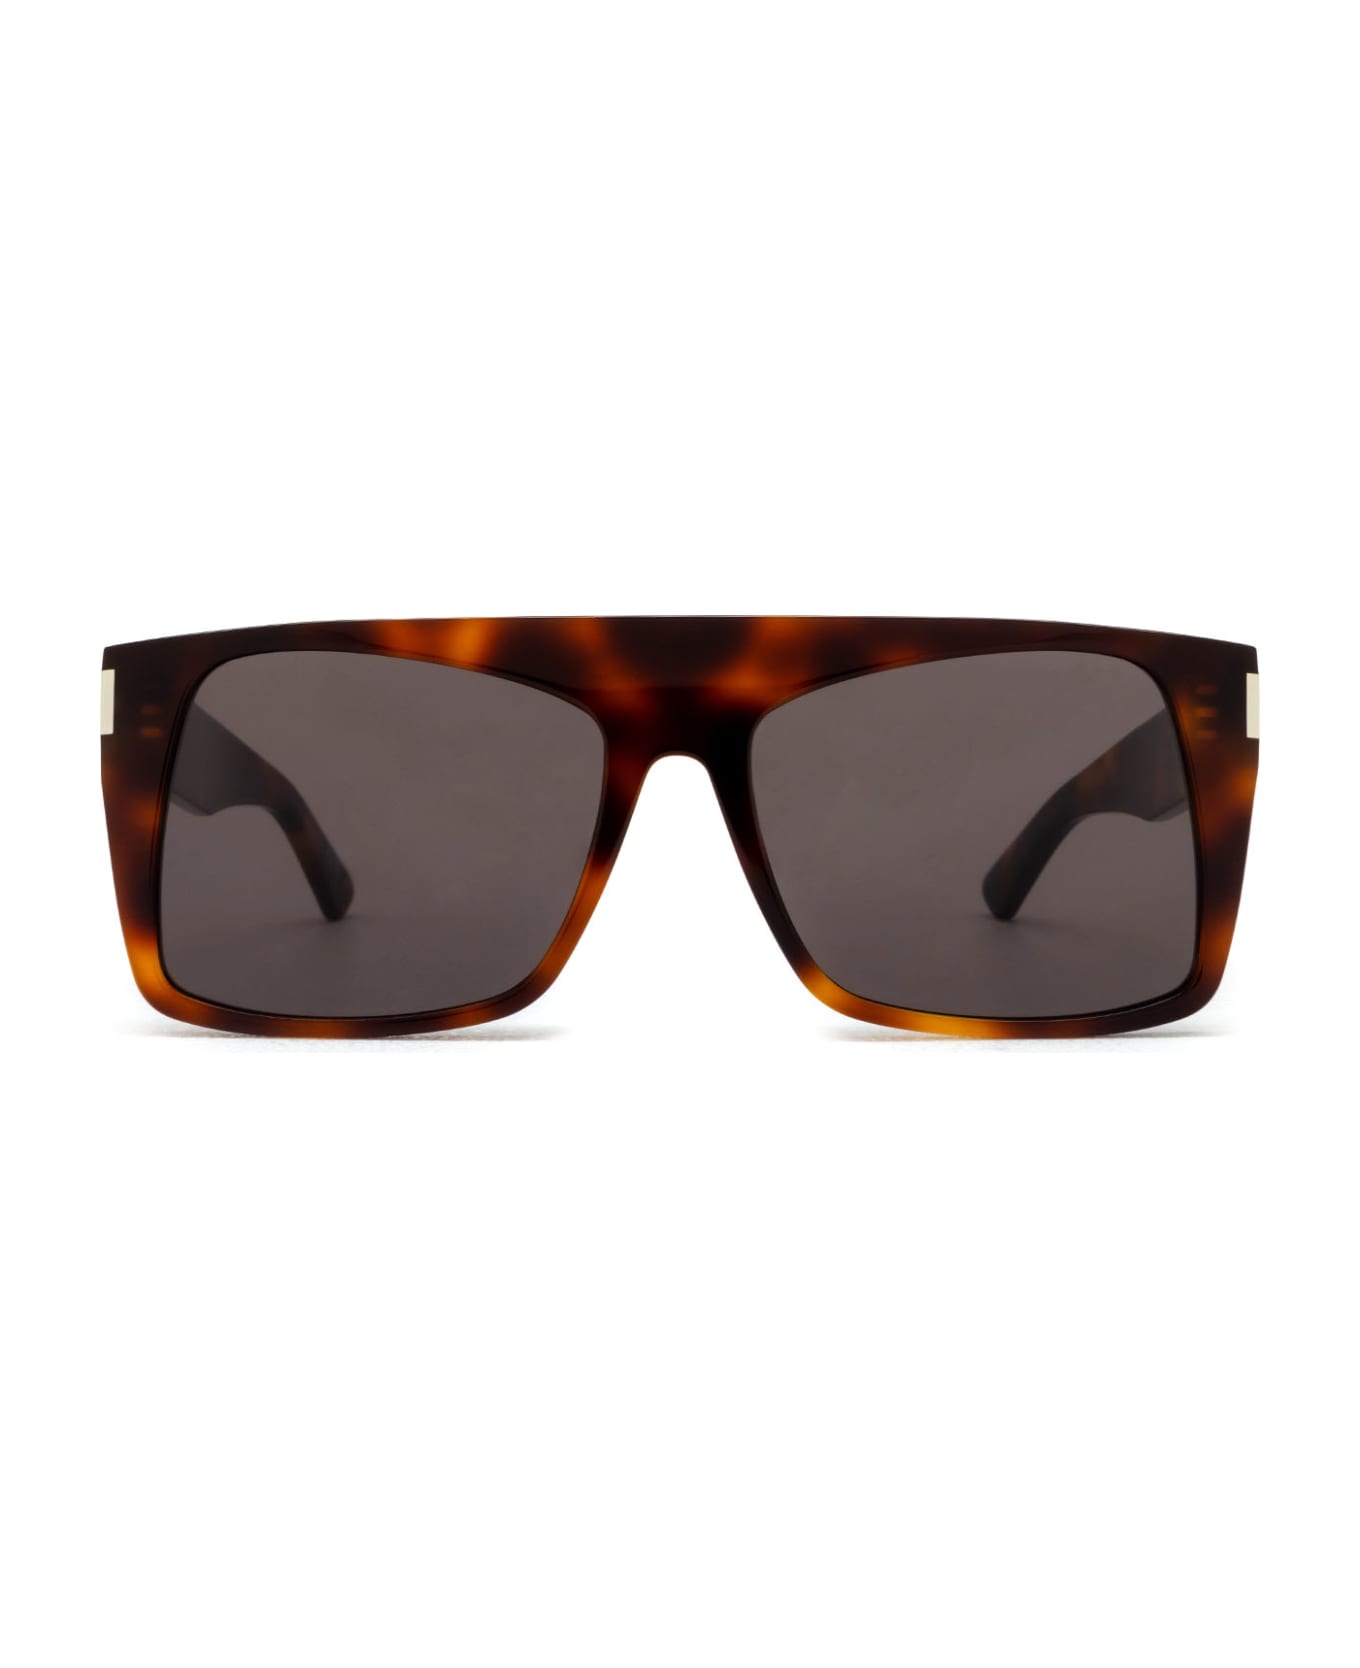 Saint Laurent Eyewear Sl 651 Havana Sunglasses - Havana サングラス